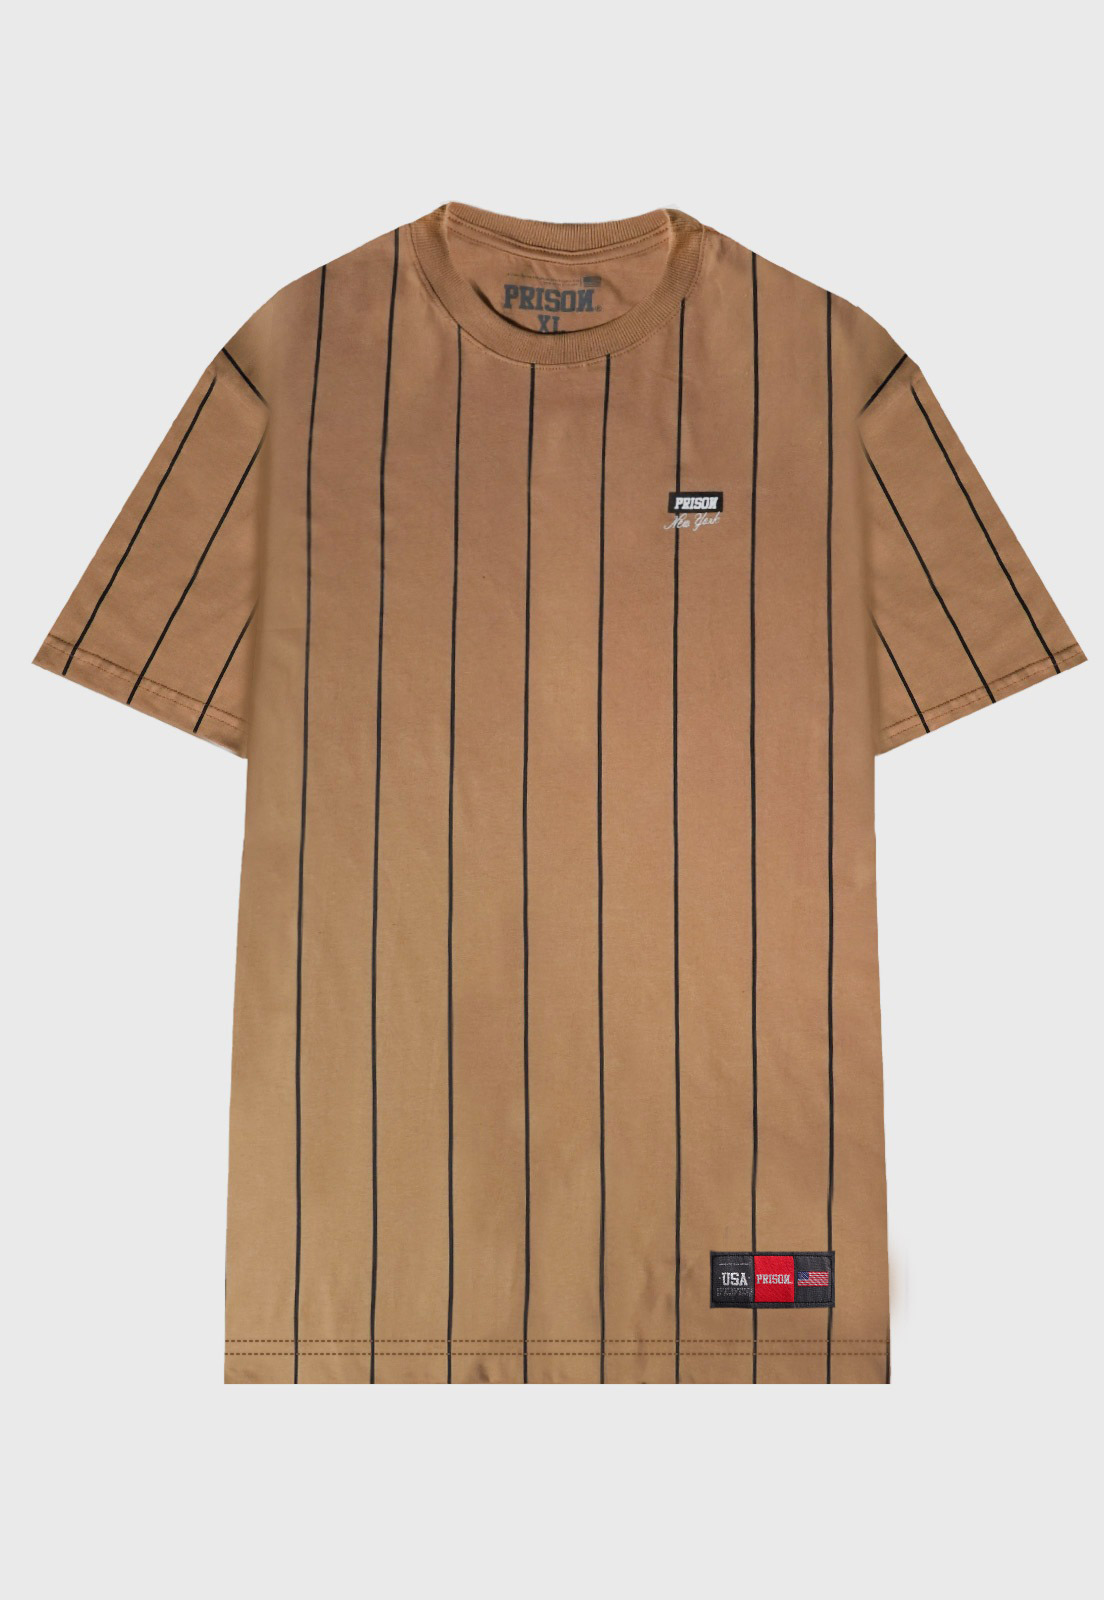 Camiseta Streetwear Prison NY Black Lines